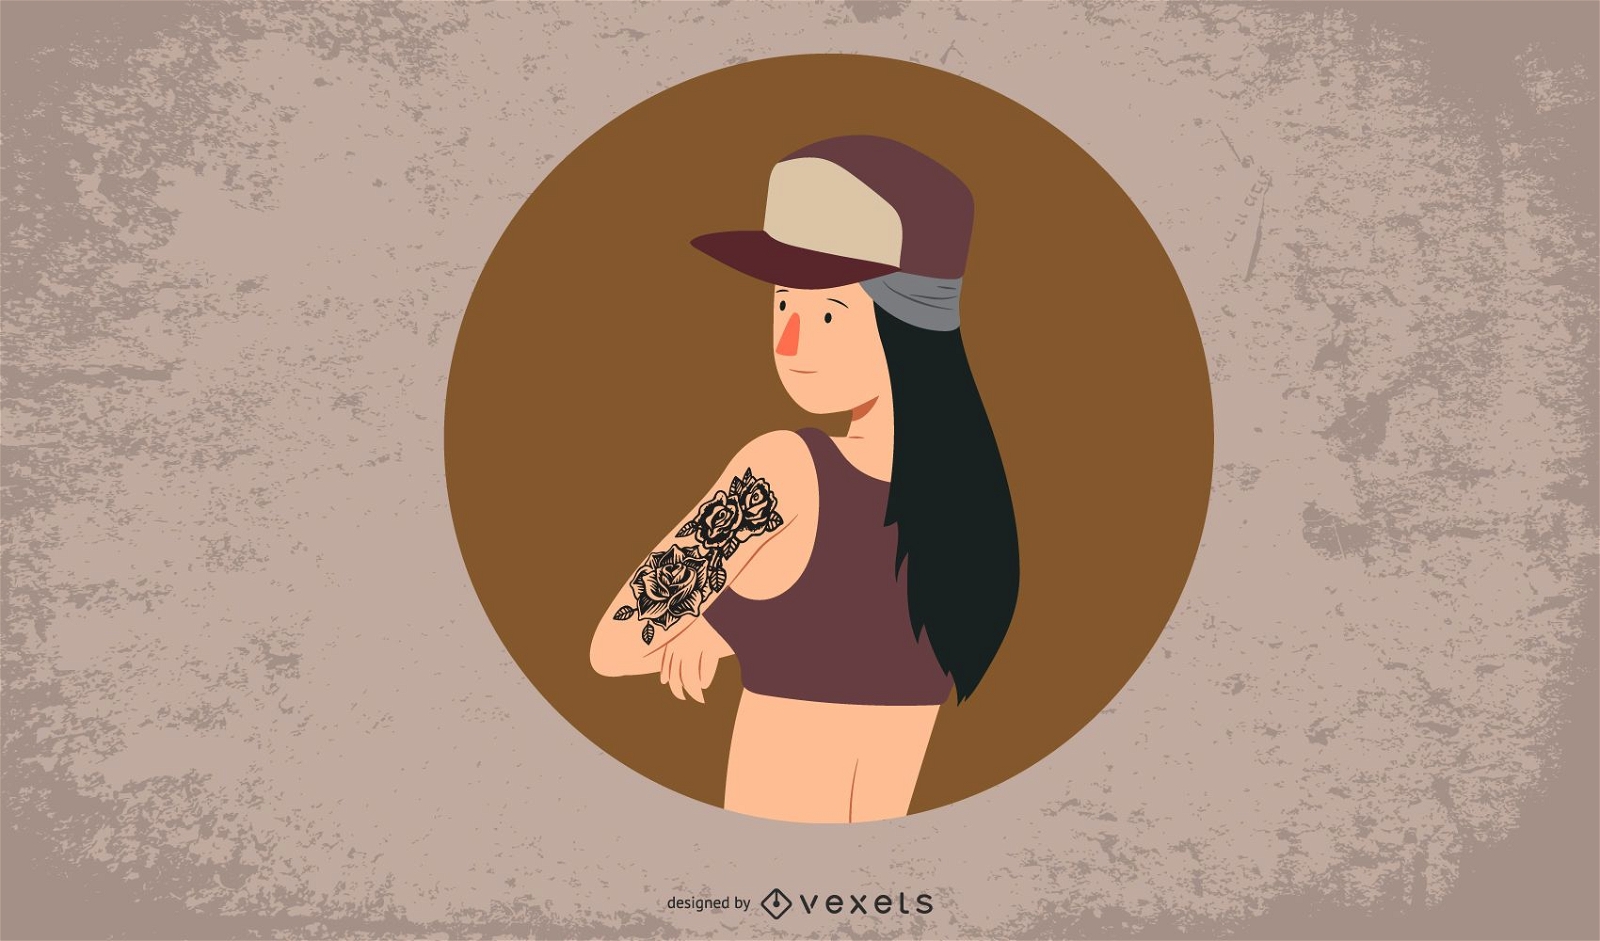 Tattooed Woman character illustration